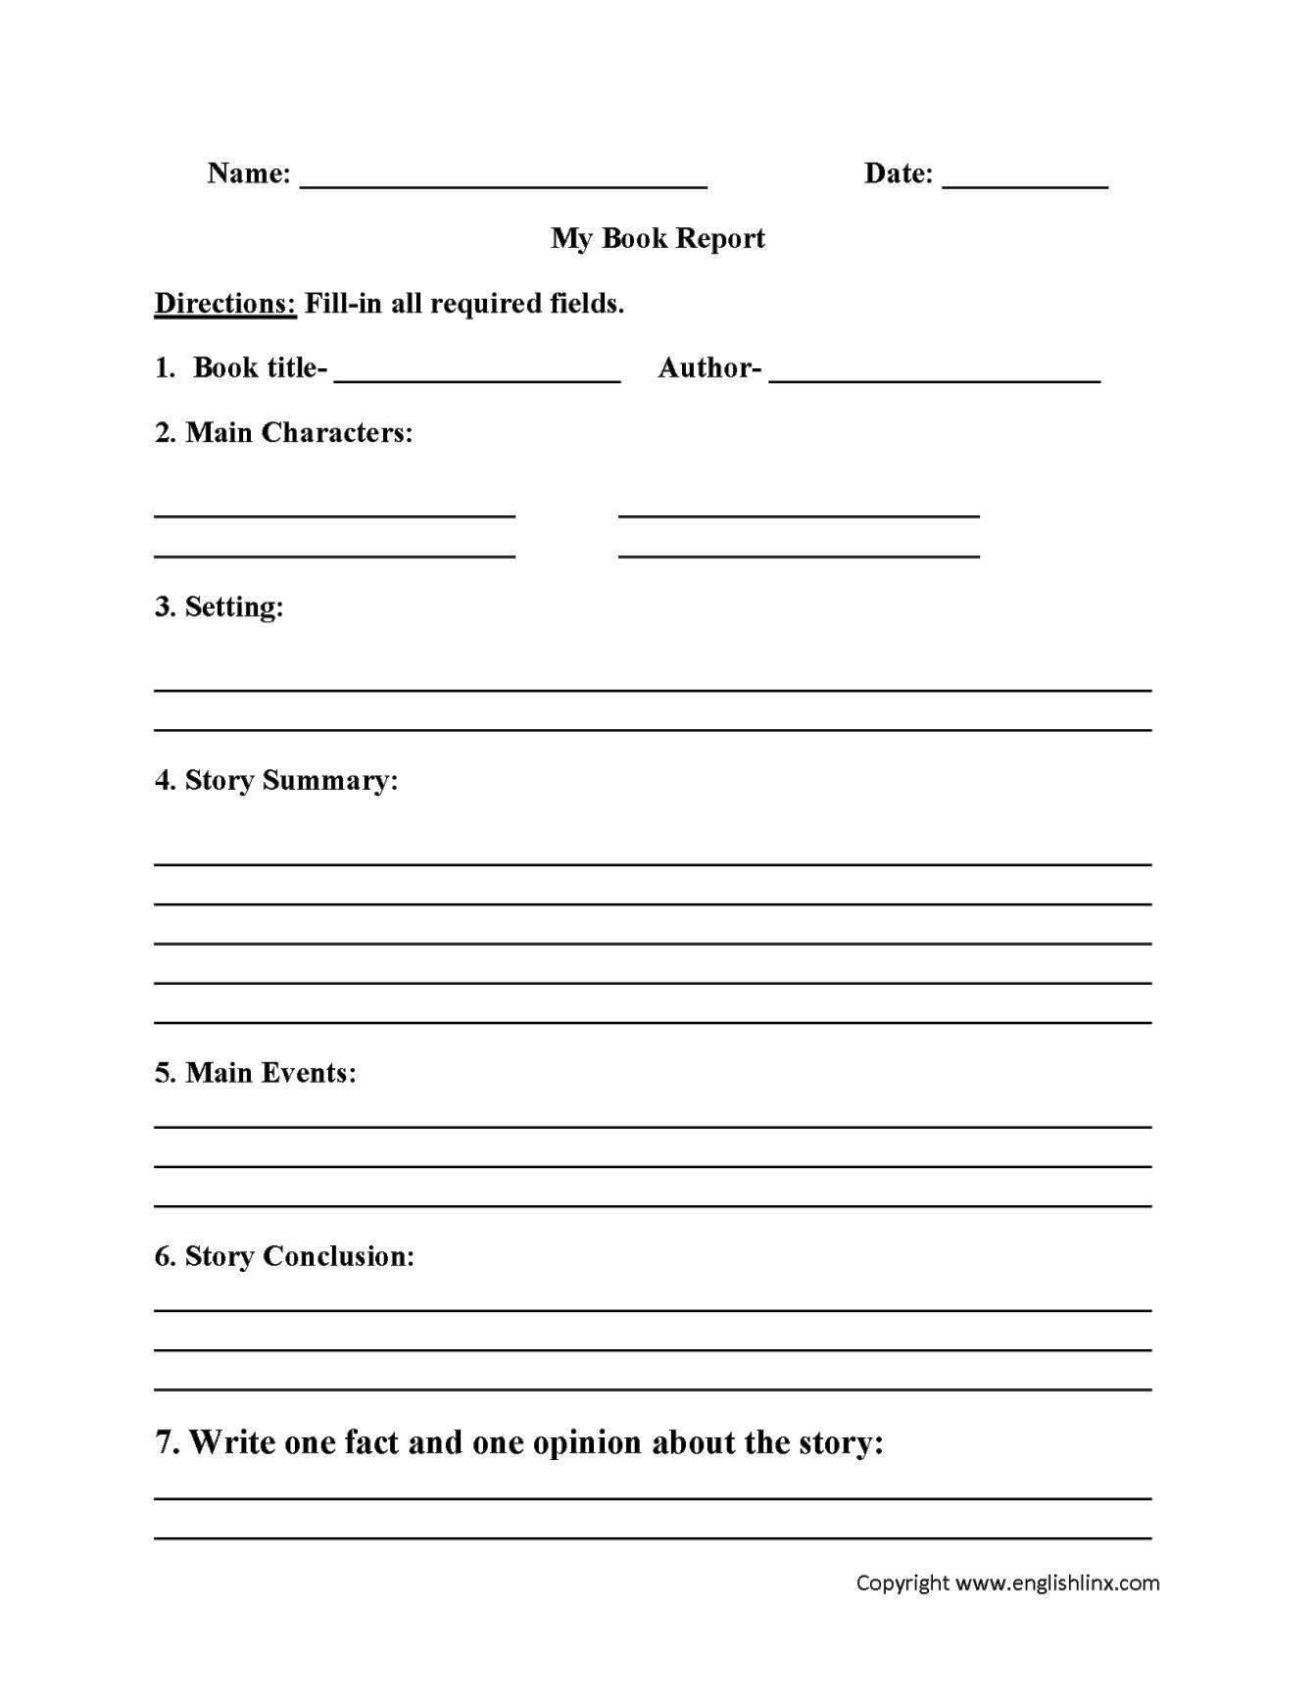 student-book-review-template-sampletemplatess-sampletemplatess